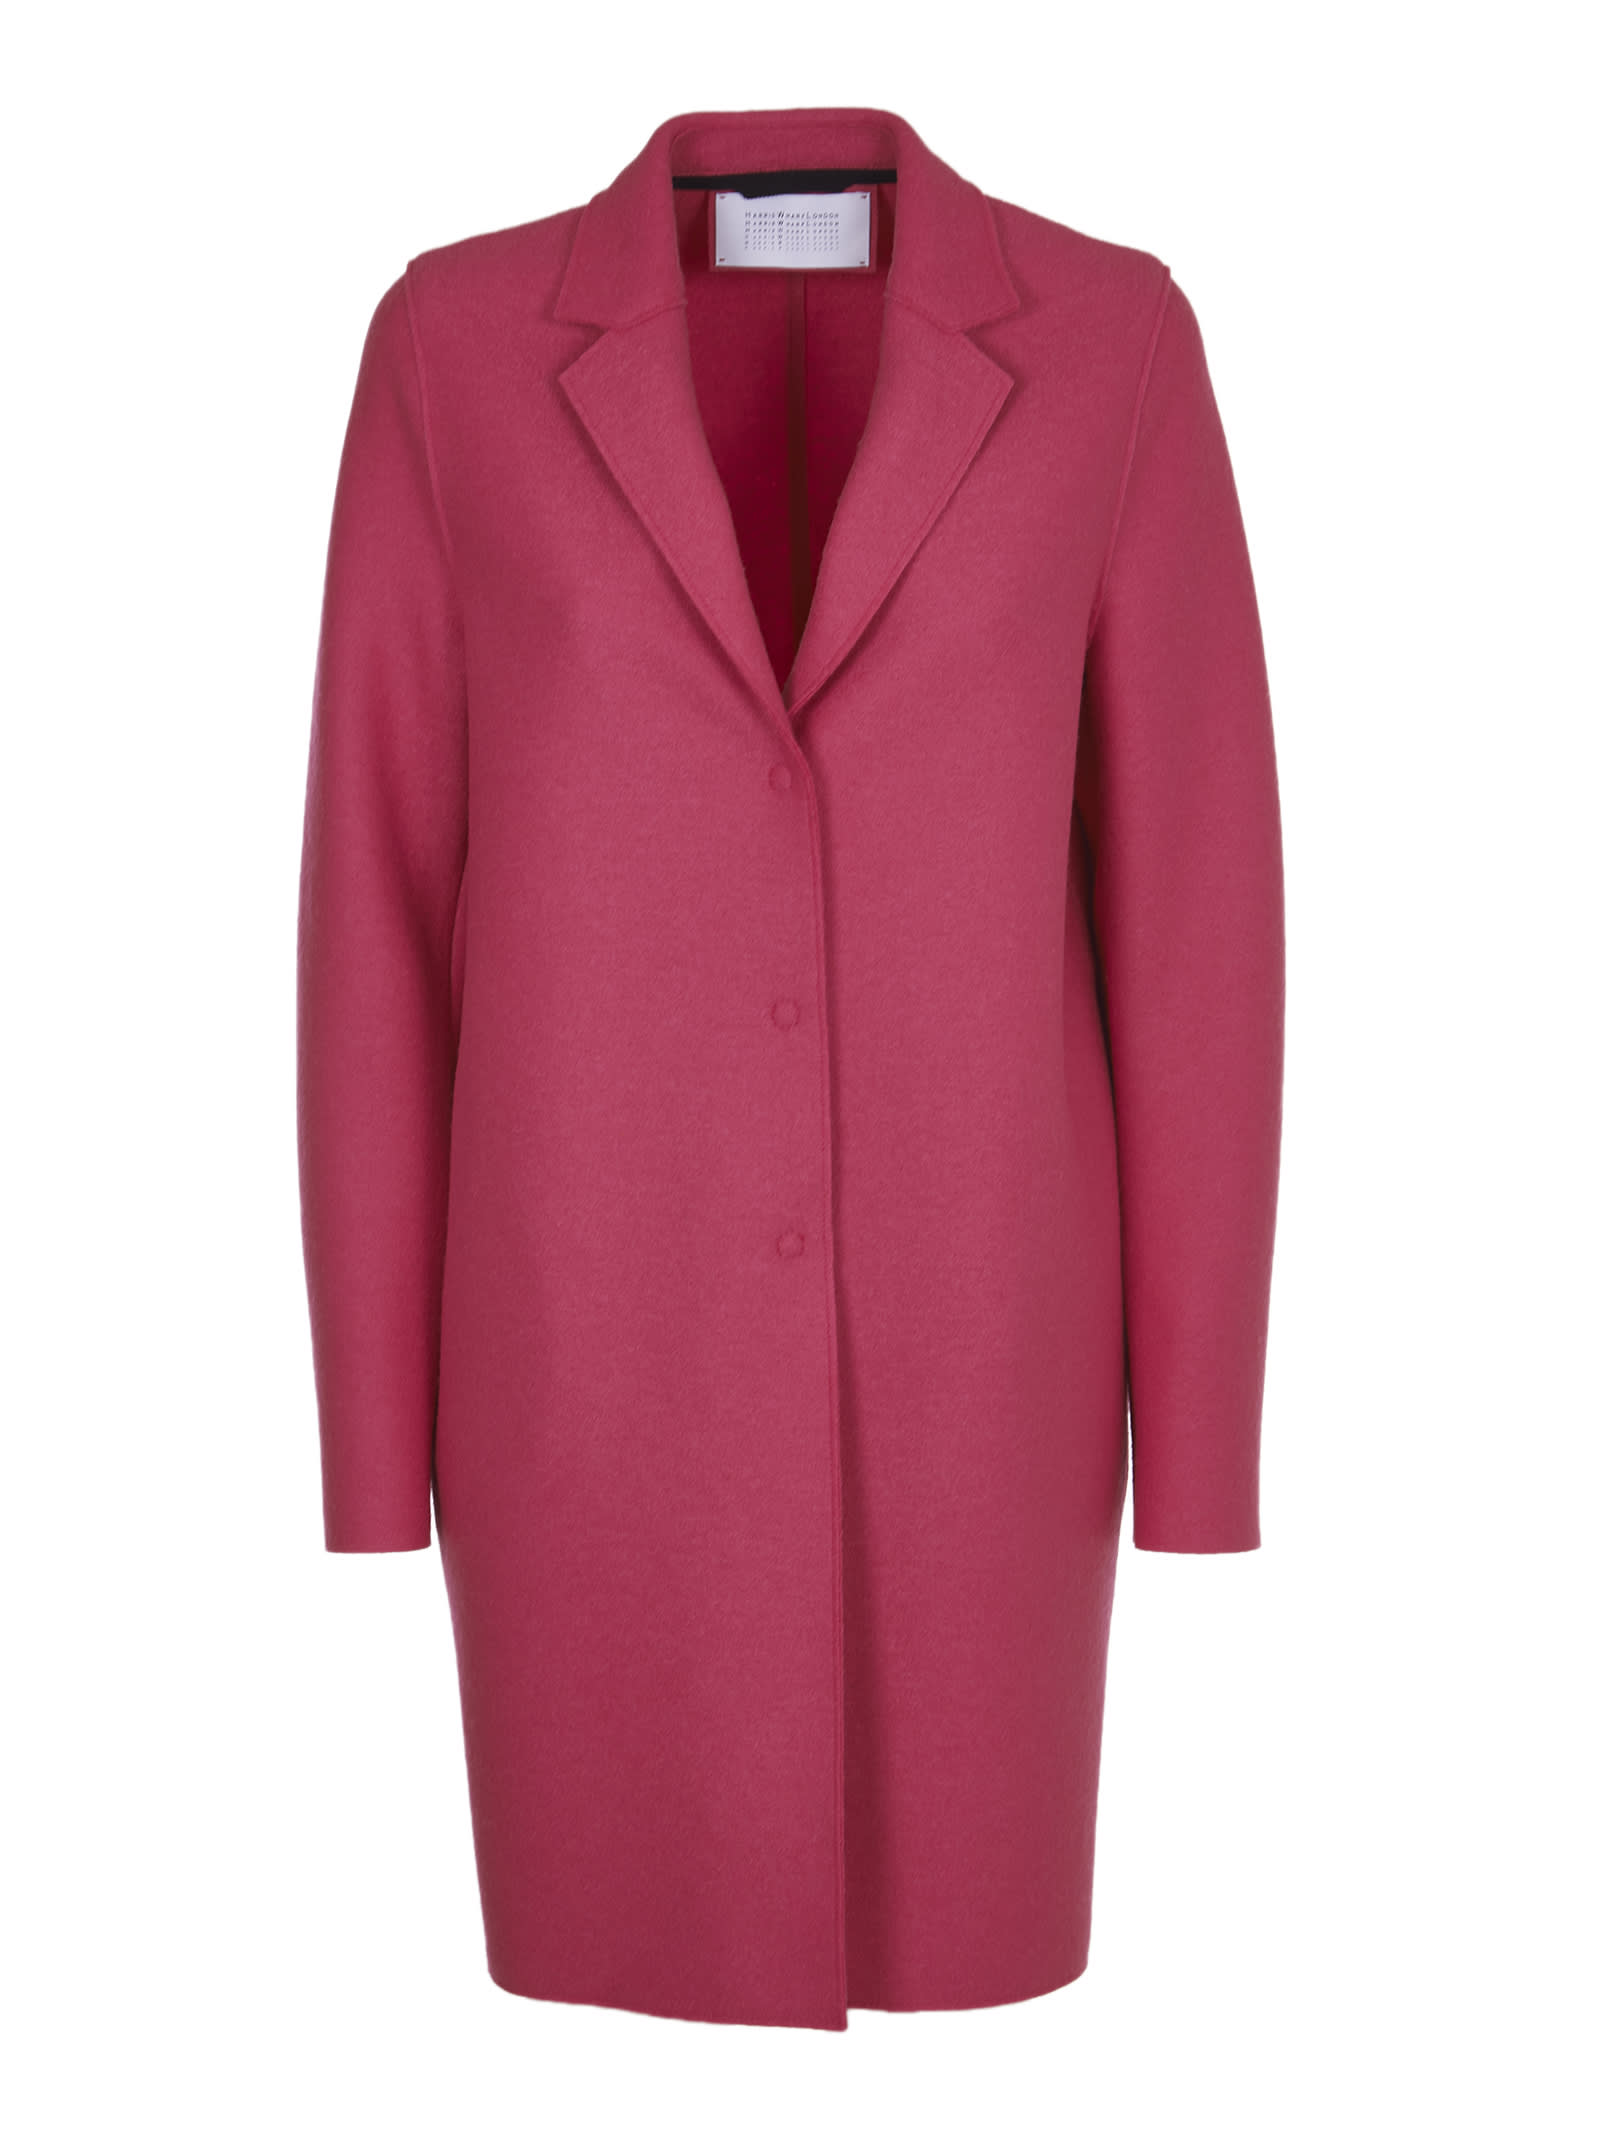 Harris Wharf London Pink Wool Coat